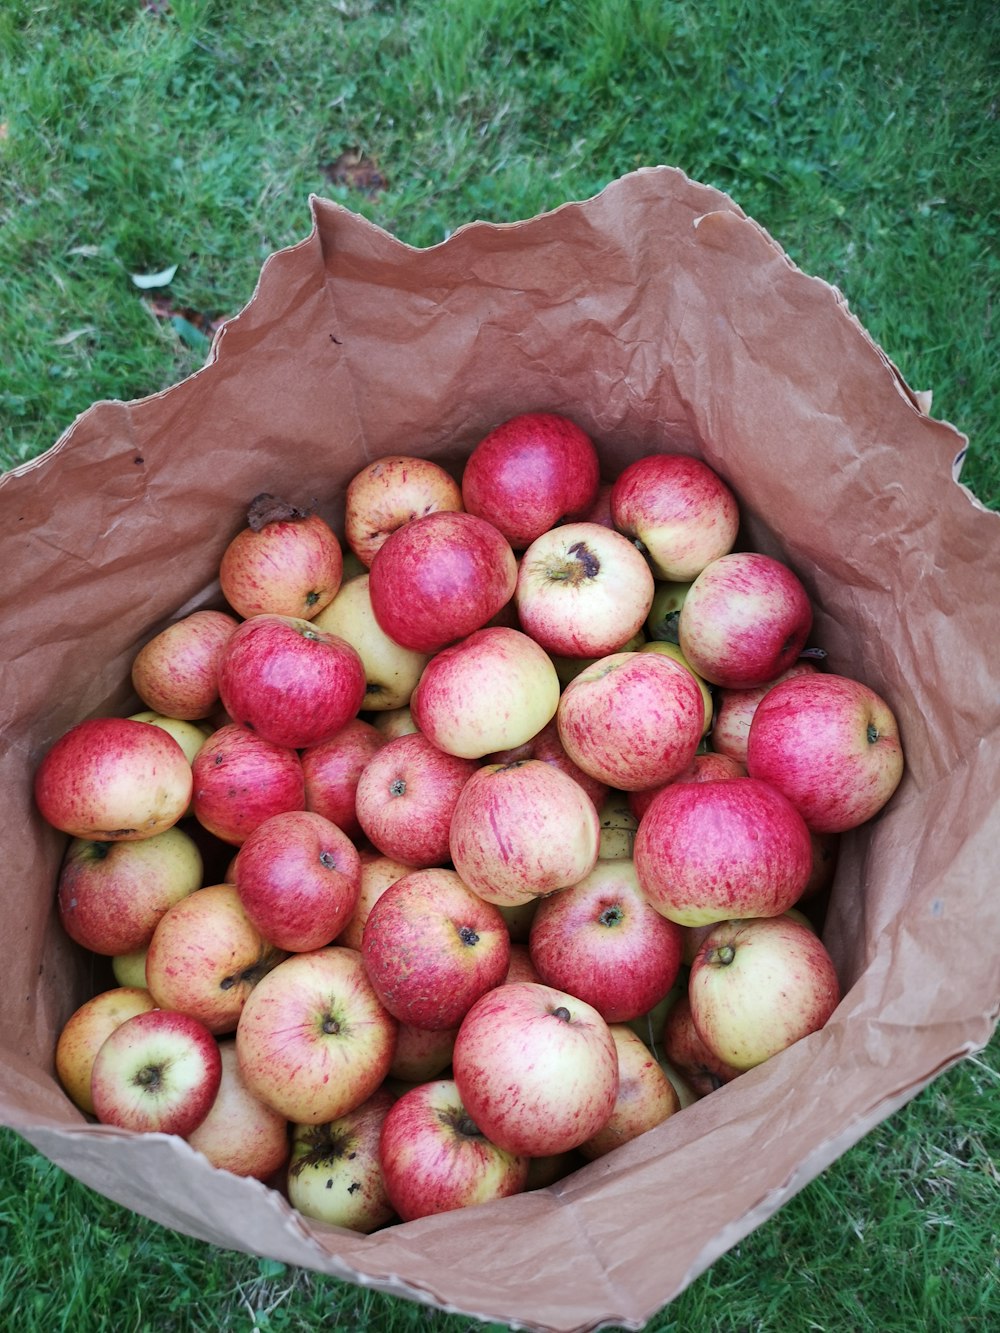 a basket of apples